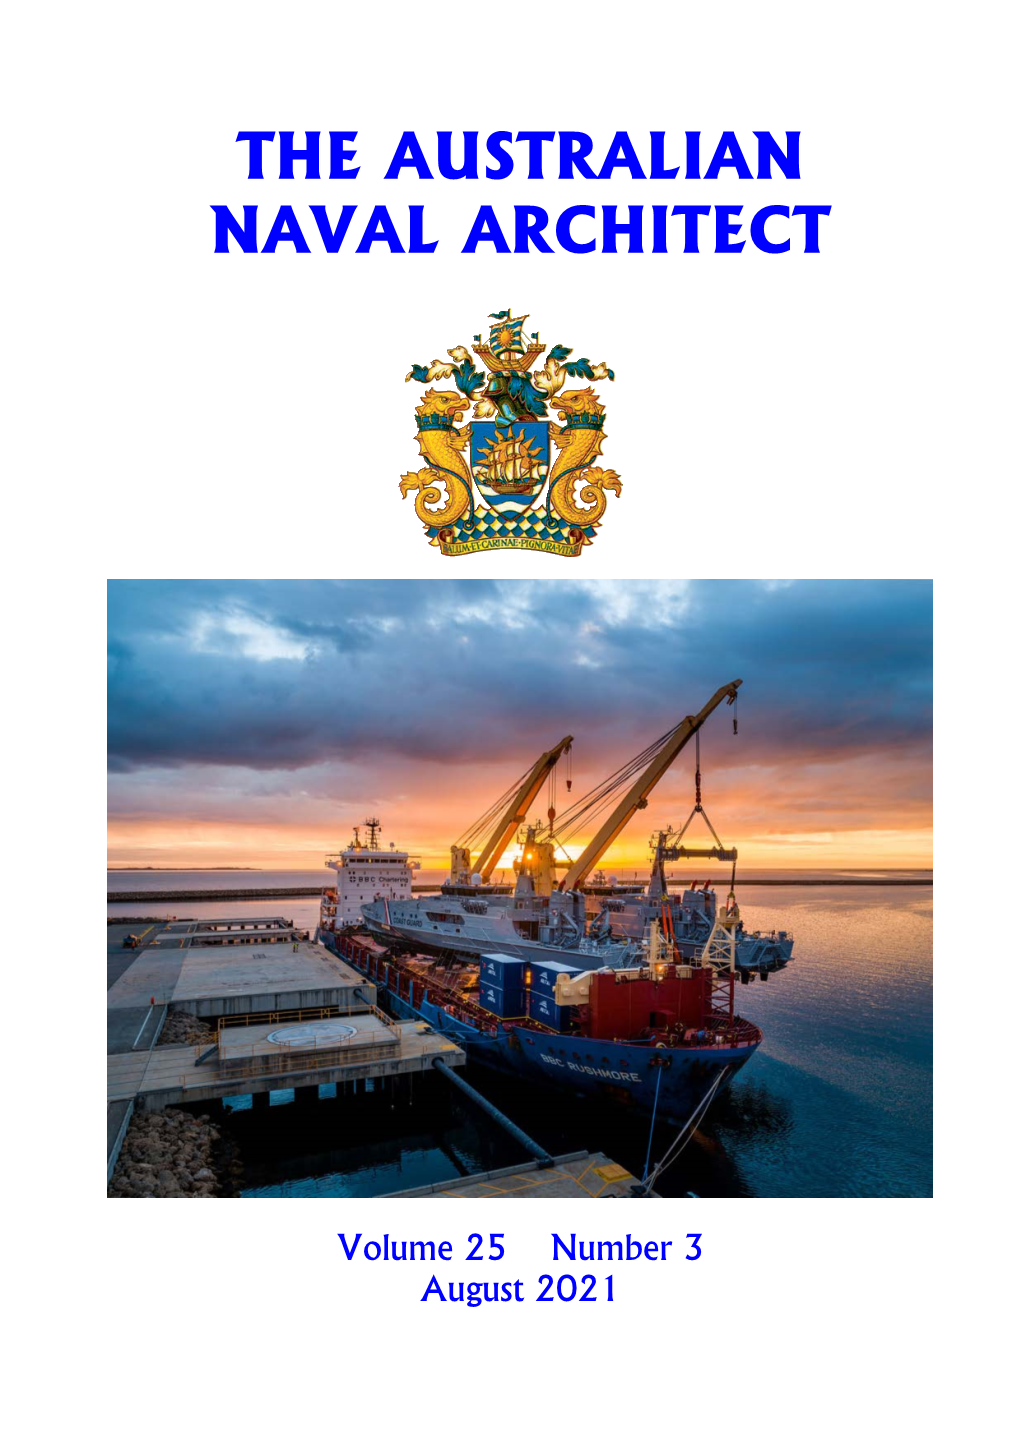 The Australian Naval Architect